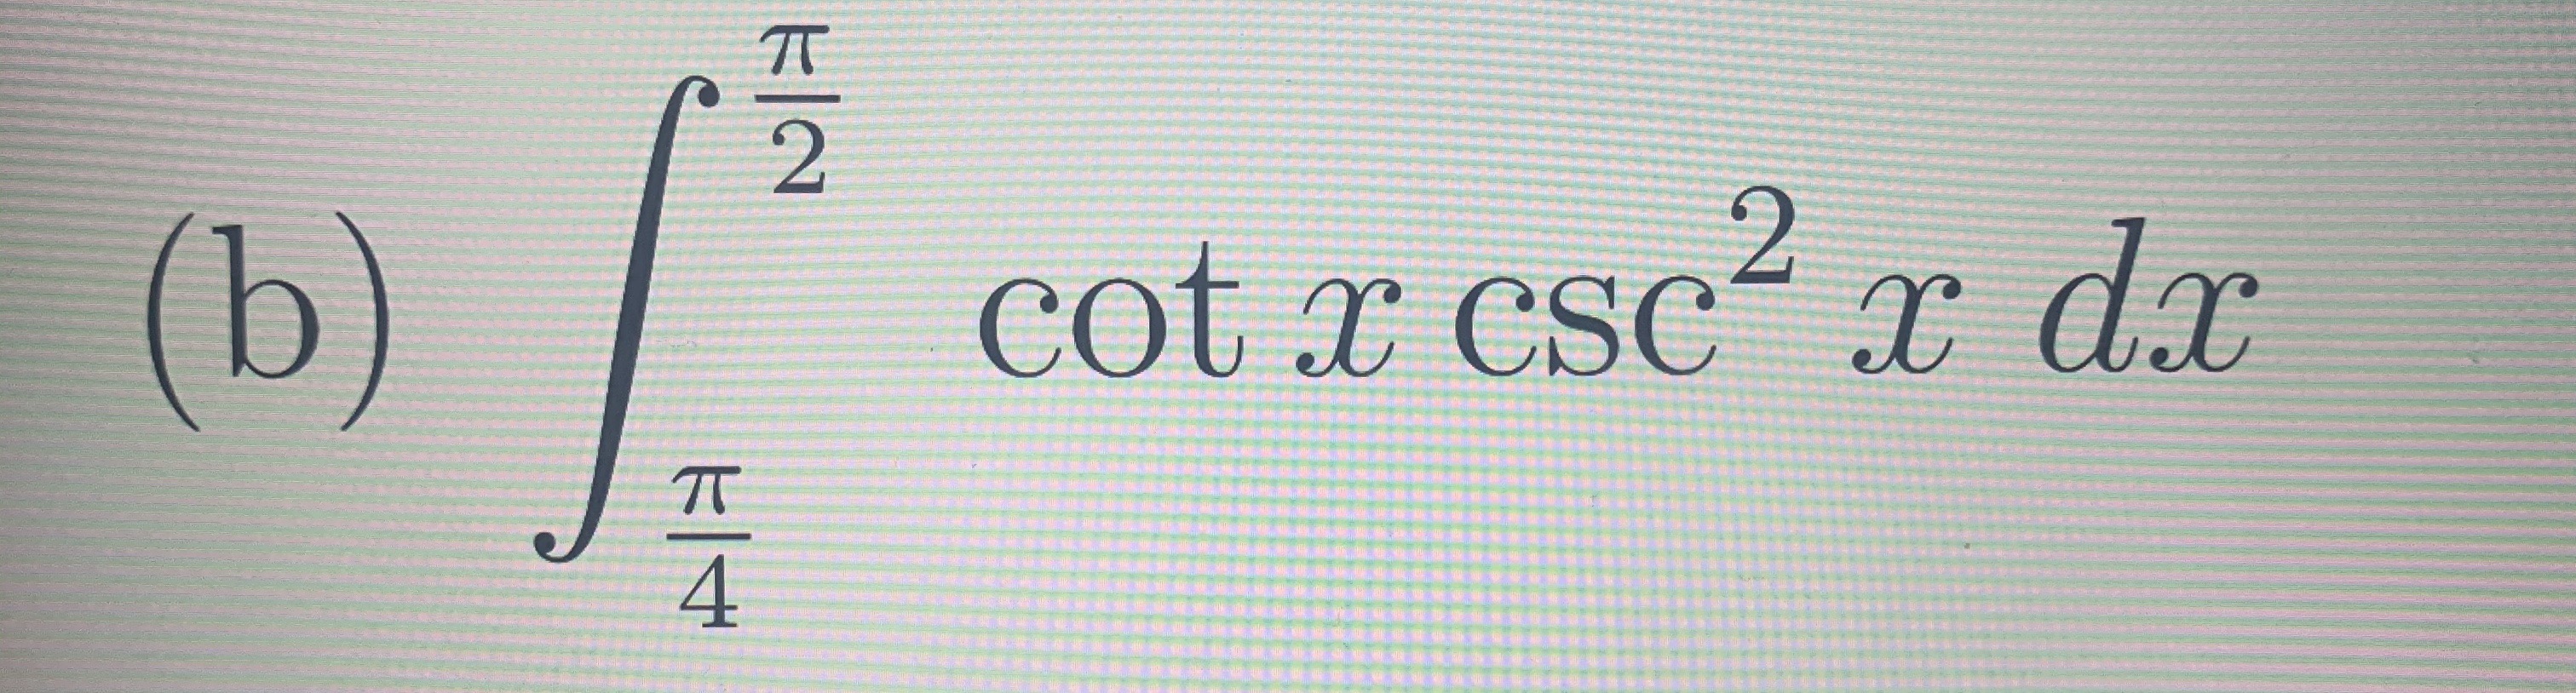 2
2
(b)
cot T csc x dx
